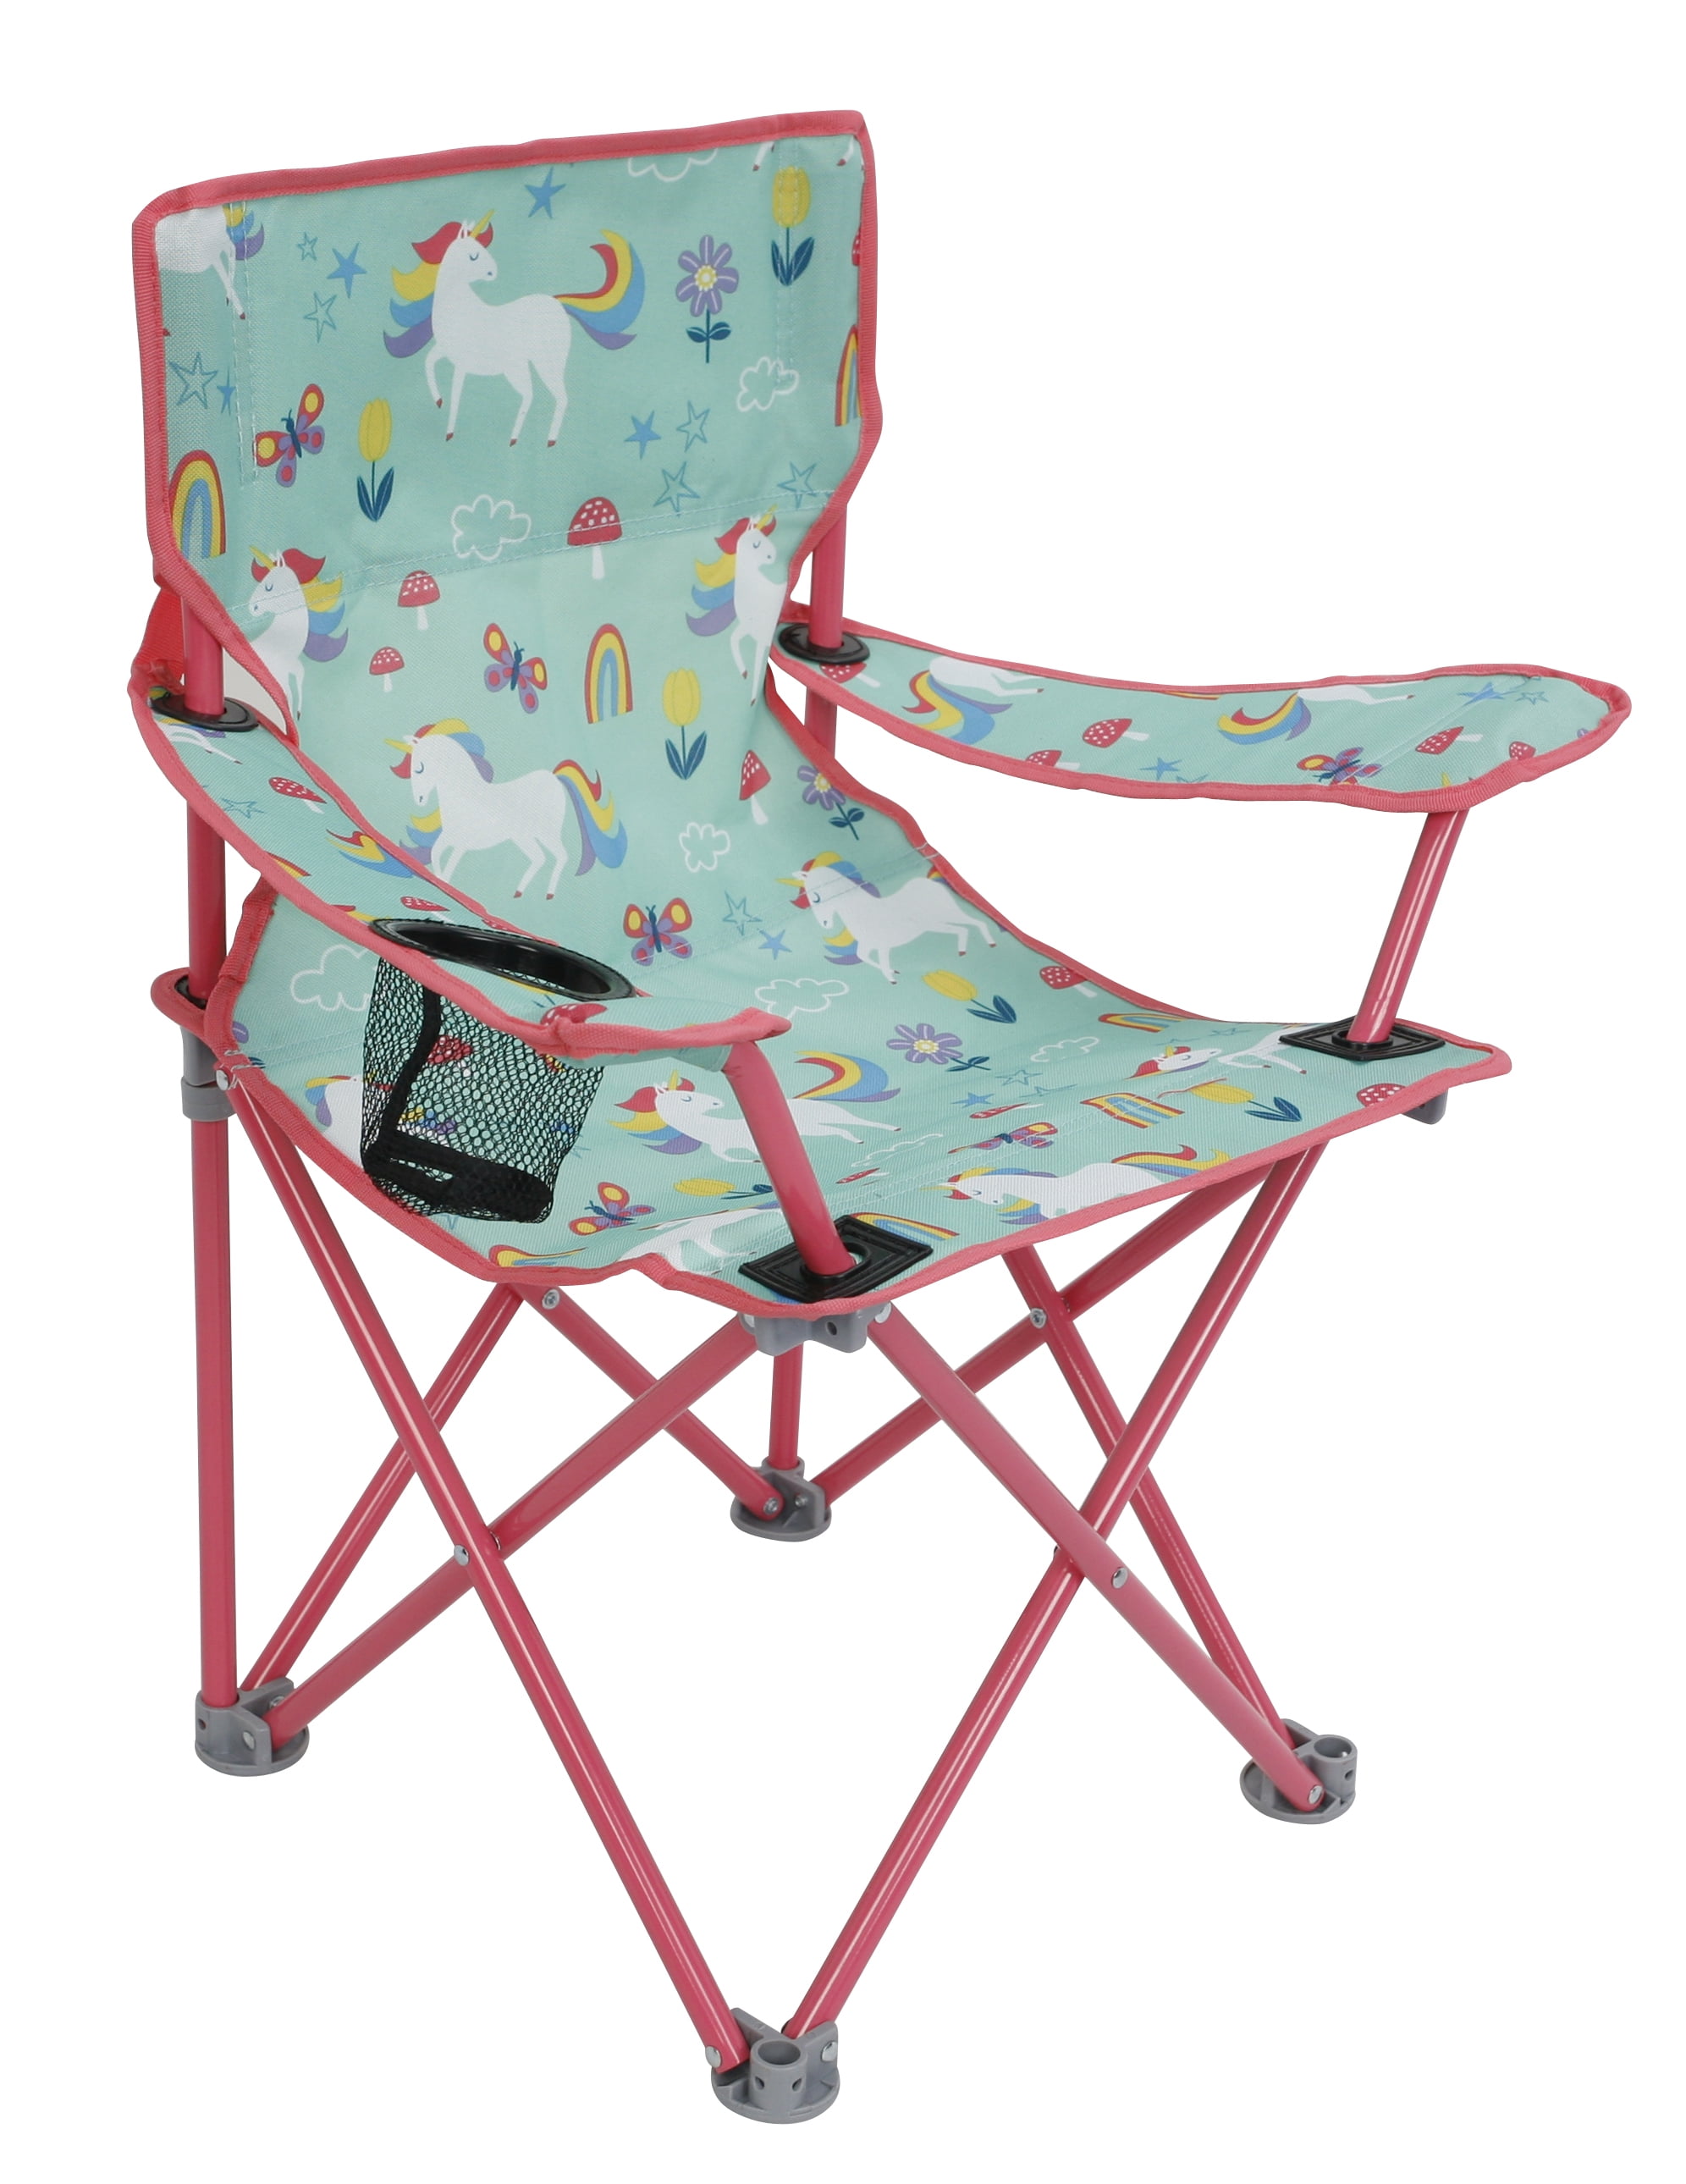 Crckt Kids Folding Camp Chair With Safety Lock 125lb Capacity Unicorn Print Walmart Com Walmart Com